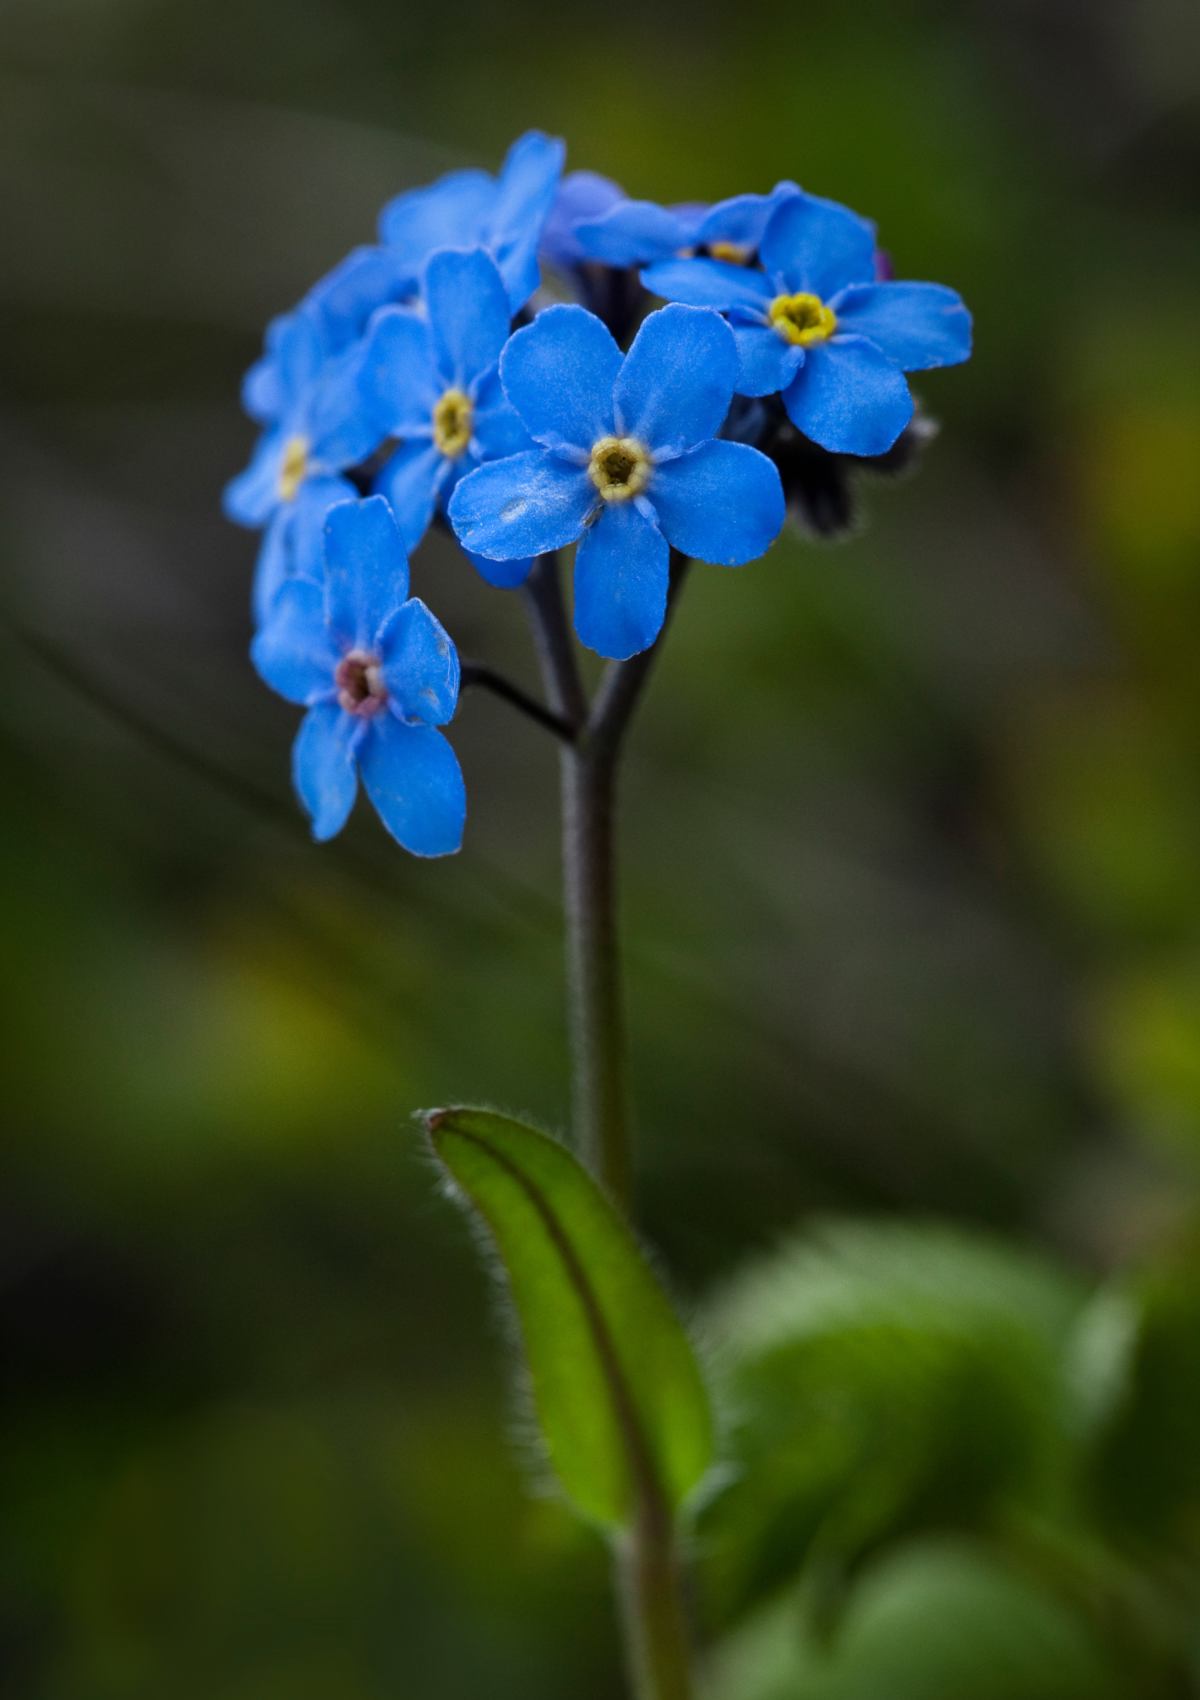 Deep blue forget-me-not cluster on a single-leaved stem.